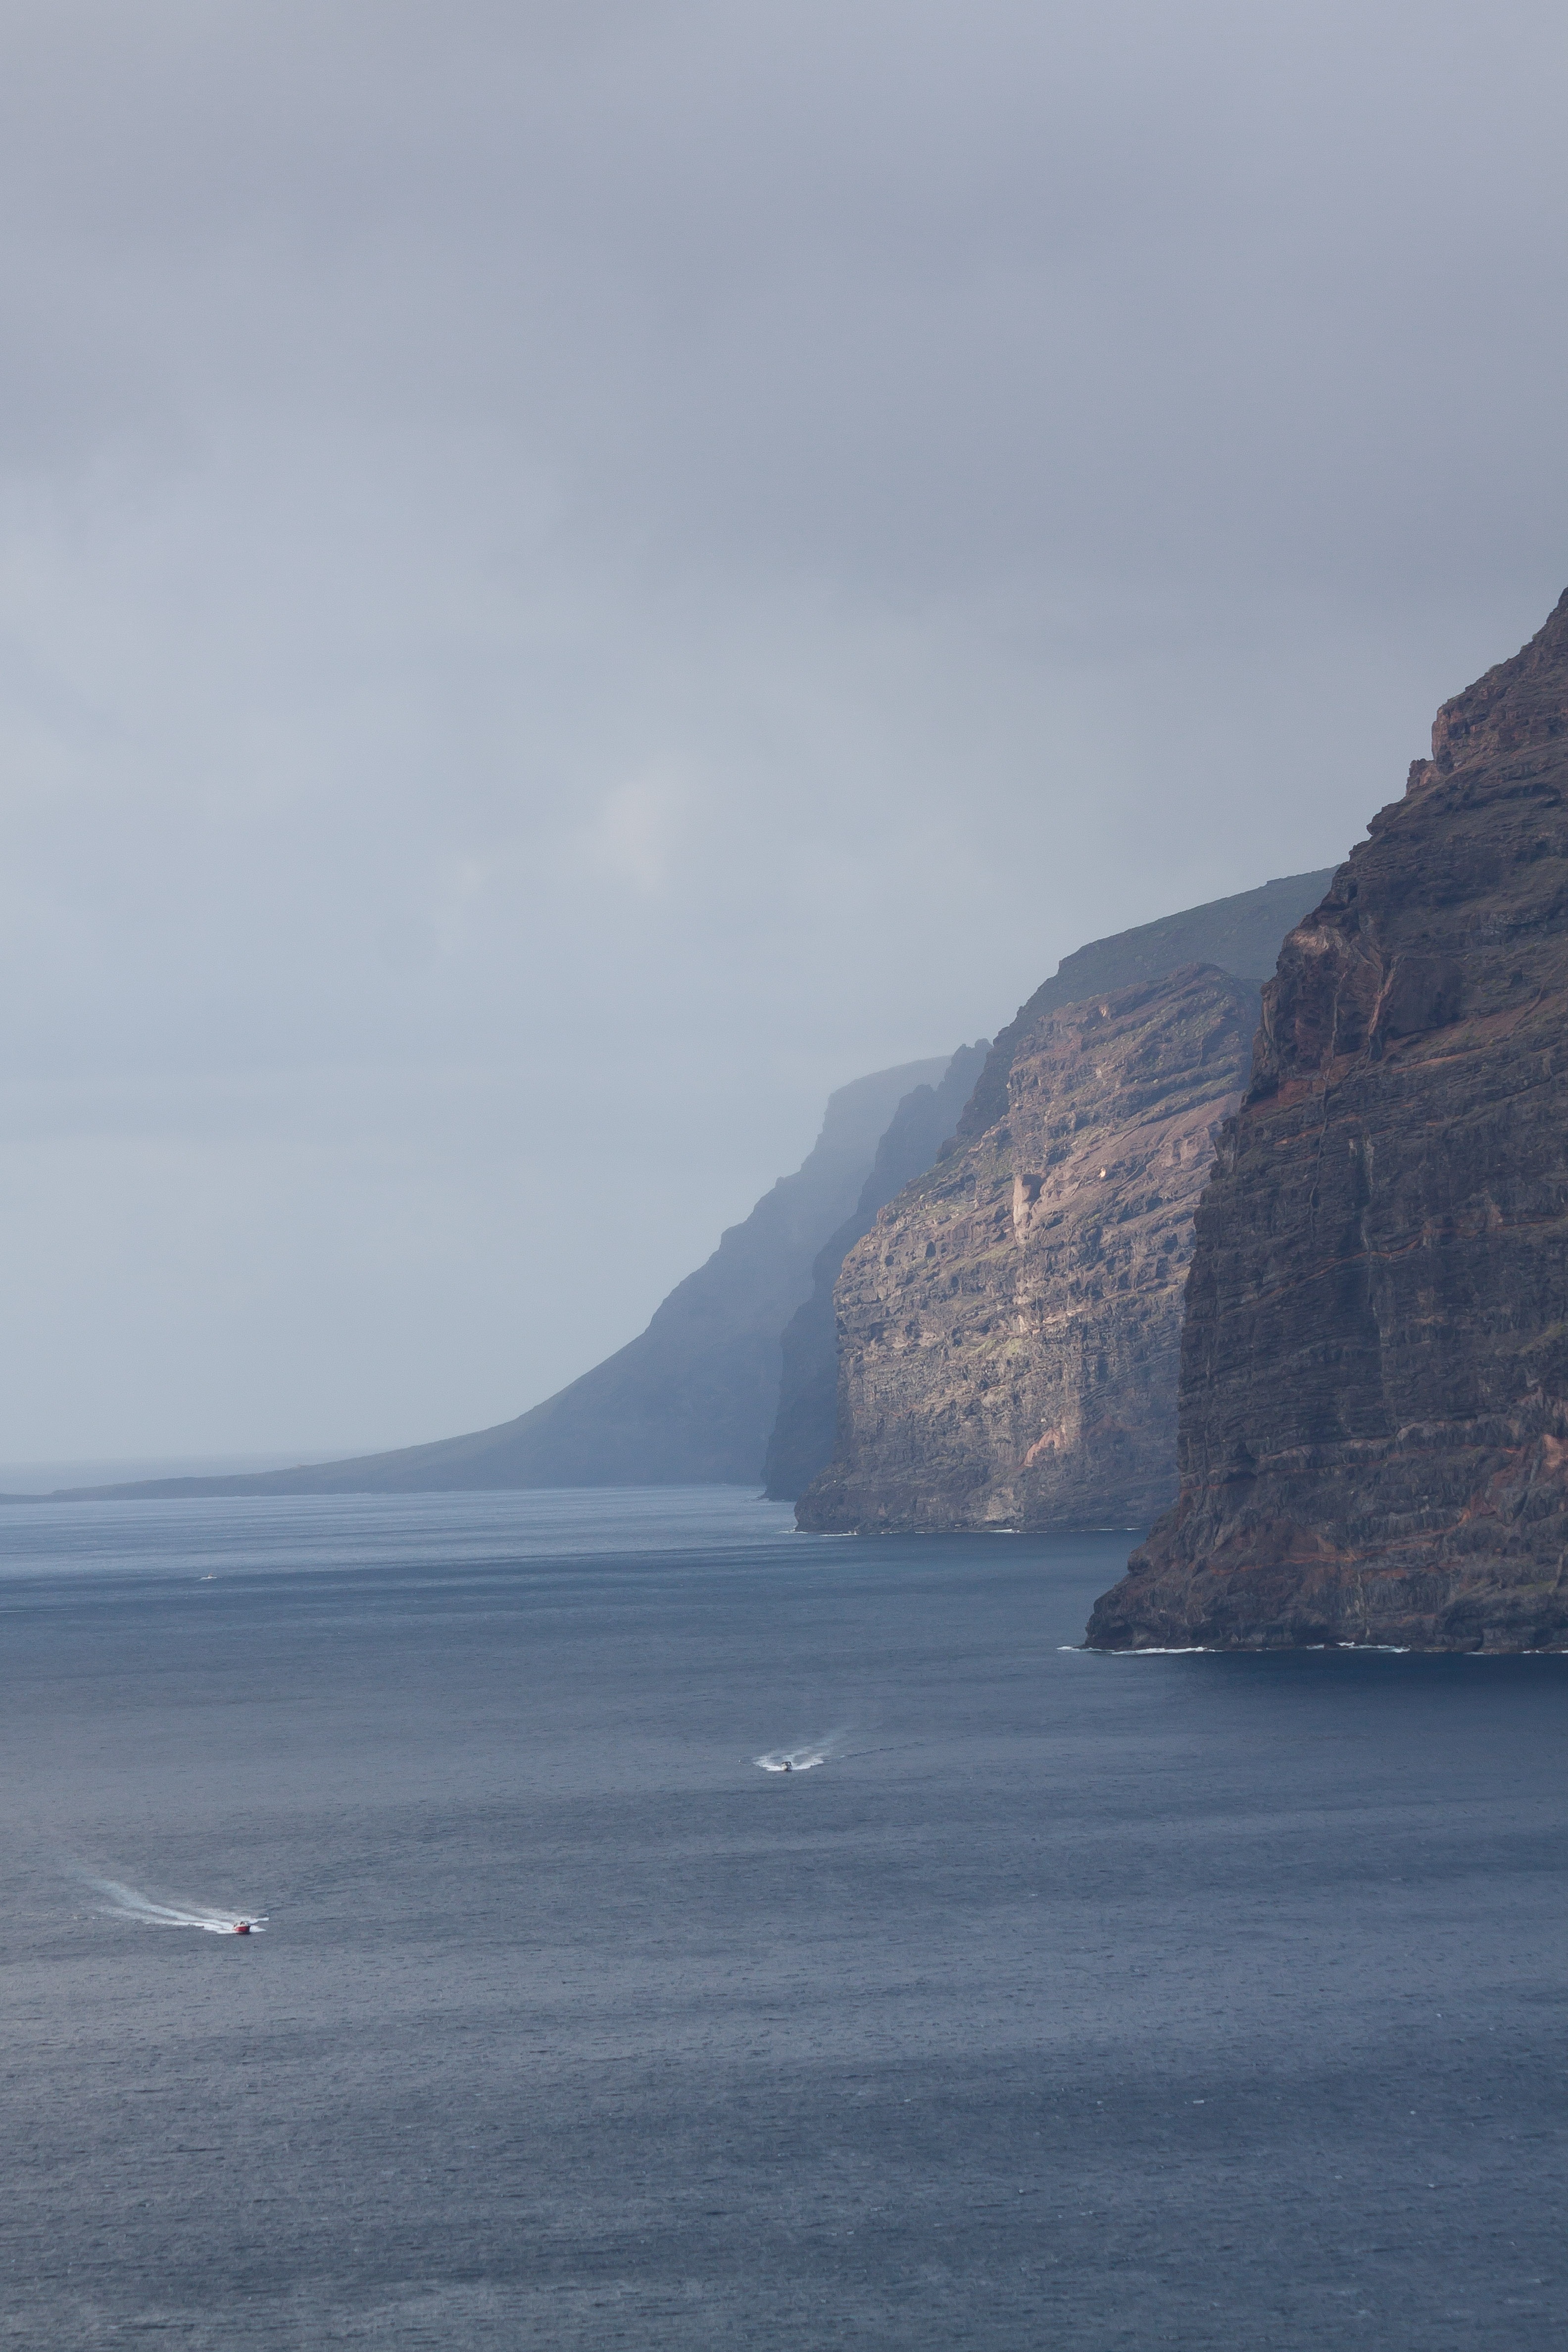 Cliffs on the island photo